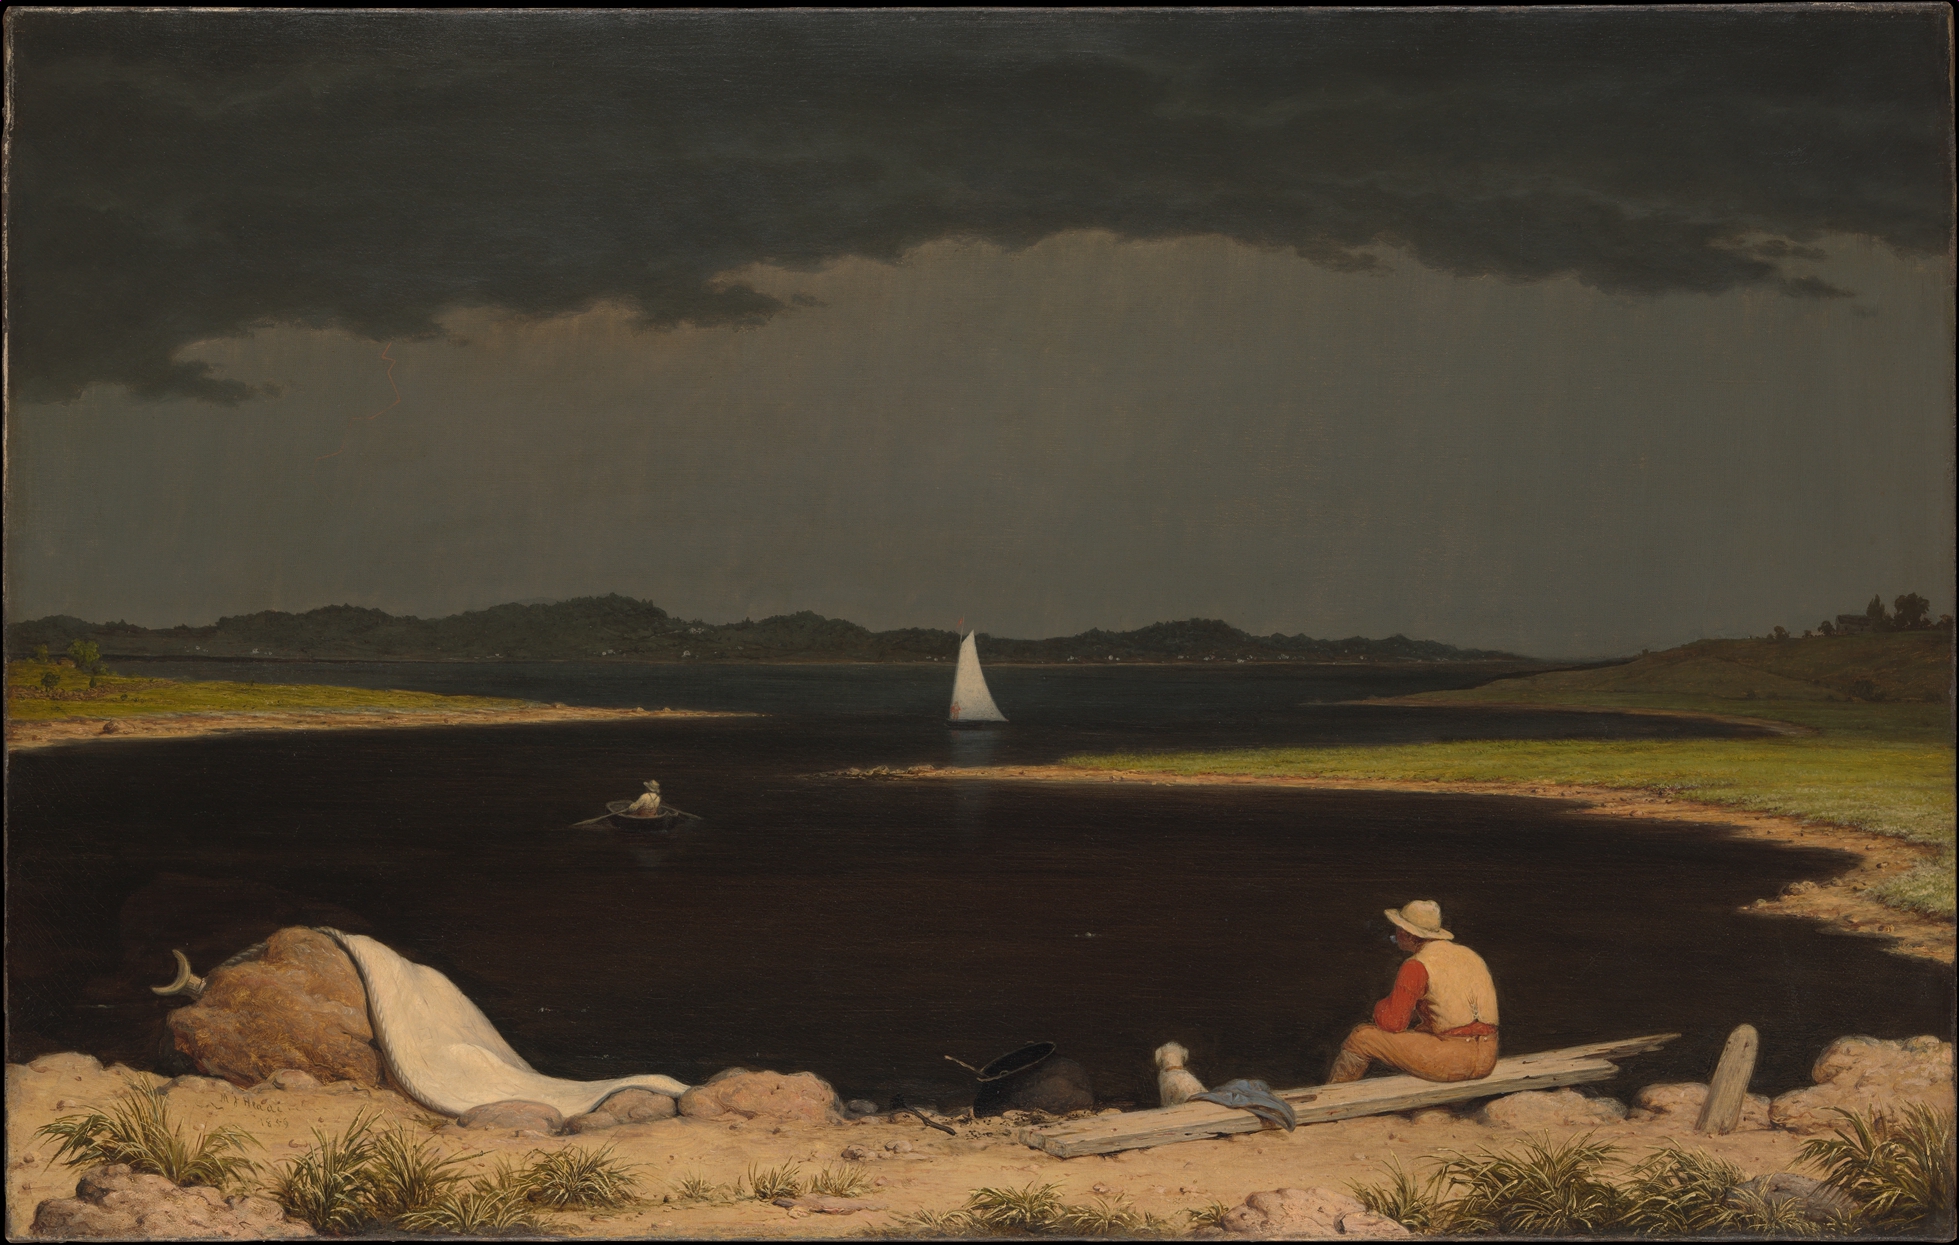 Aufkommender Sturm by Martin Johnson Heade - 1859 - 71,1 x 111,8 cm Metropolitan Museum of Art